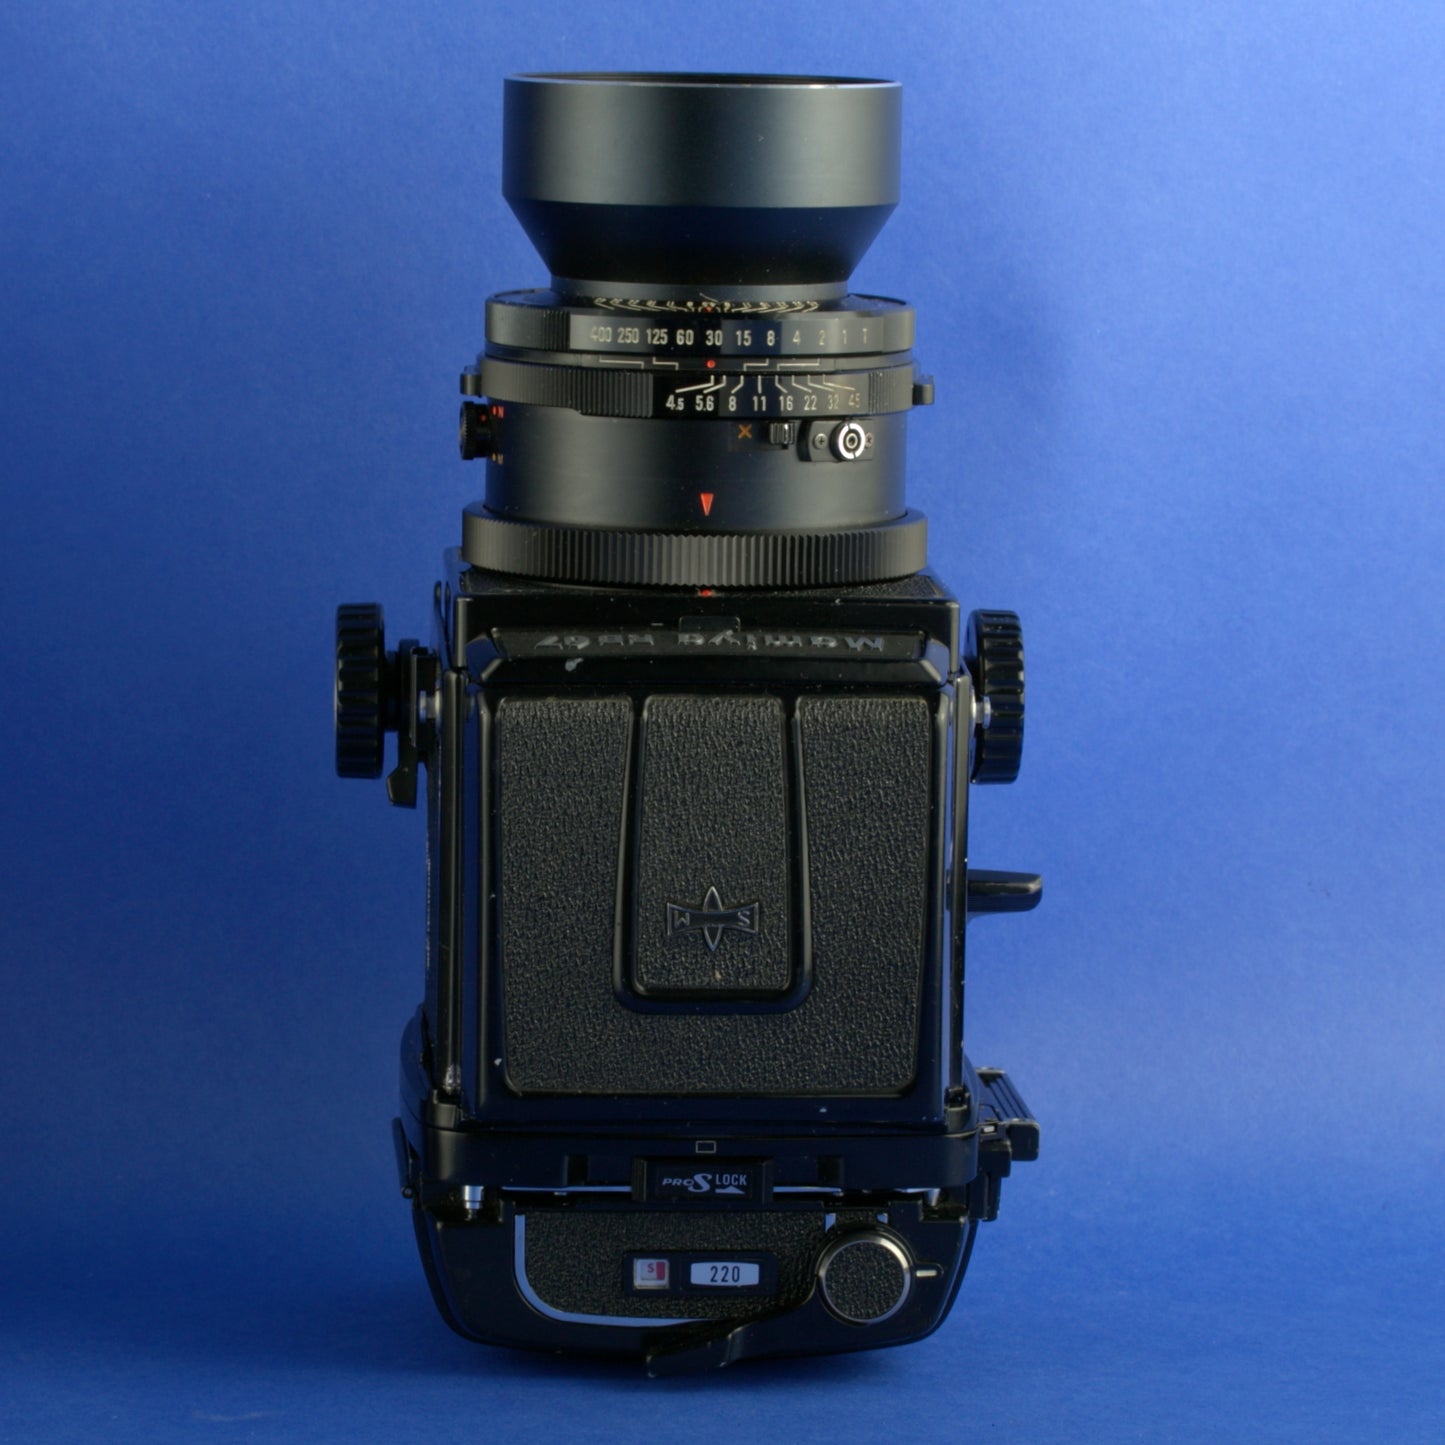 Mamiya RB67 Pro S Medium Format Camera Kit